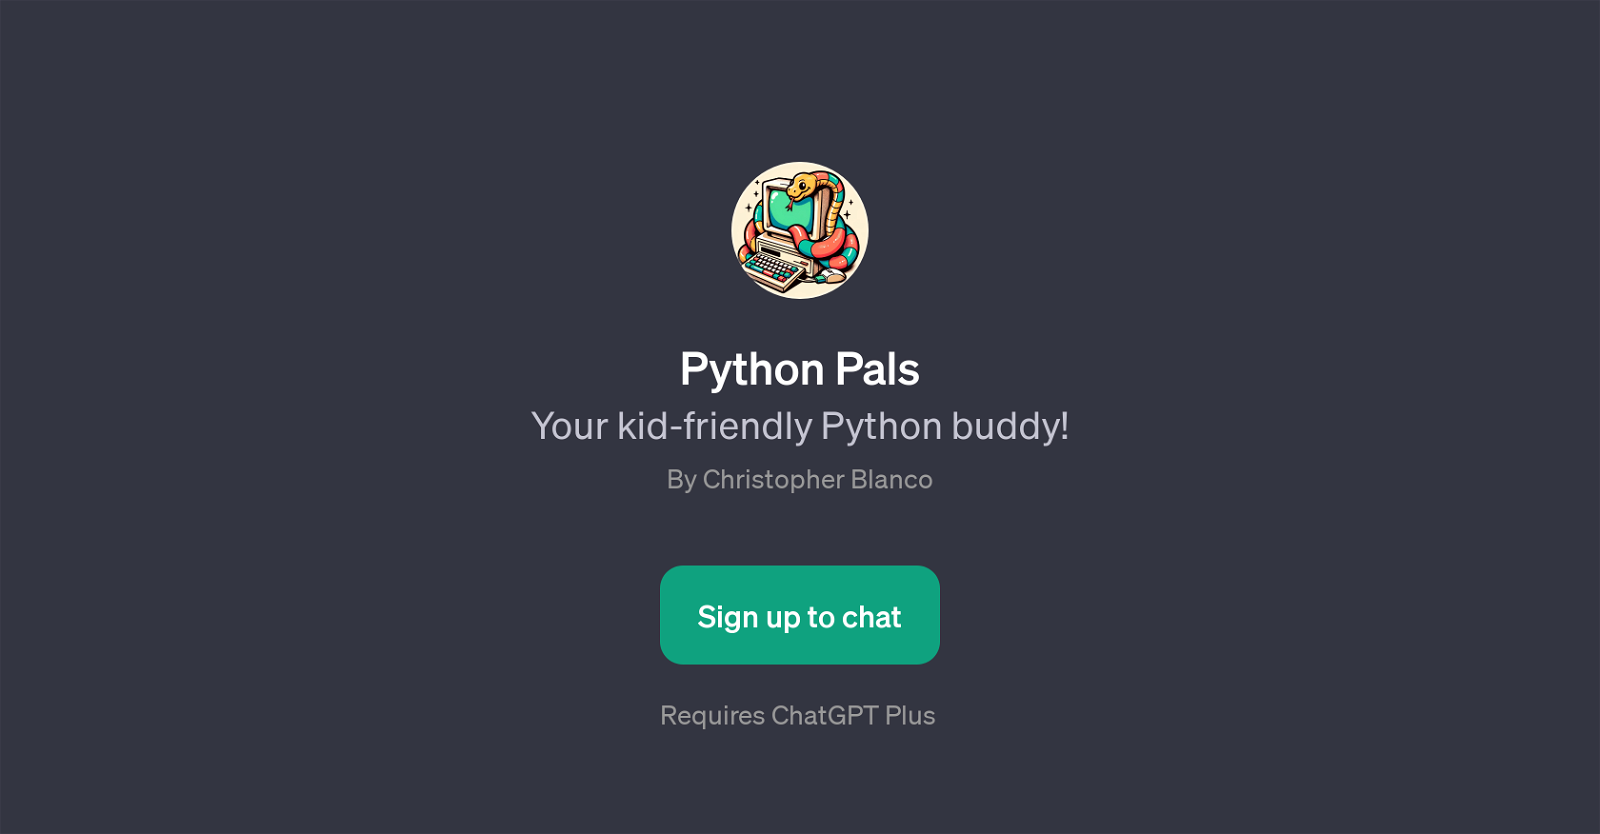 Python Pals website